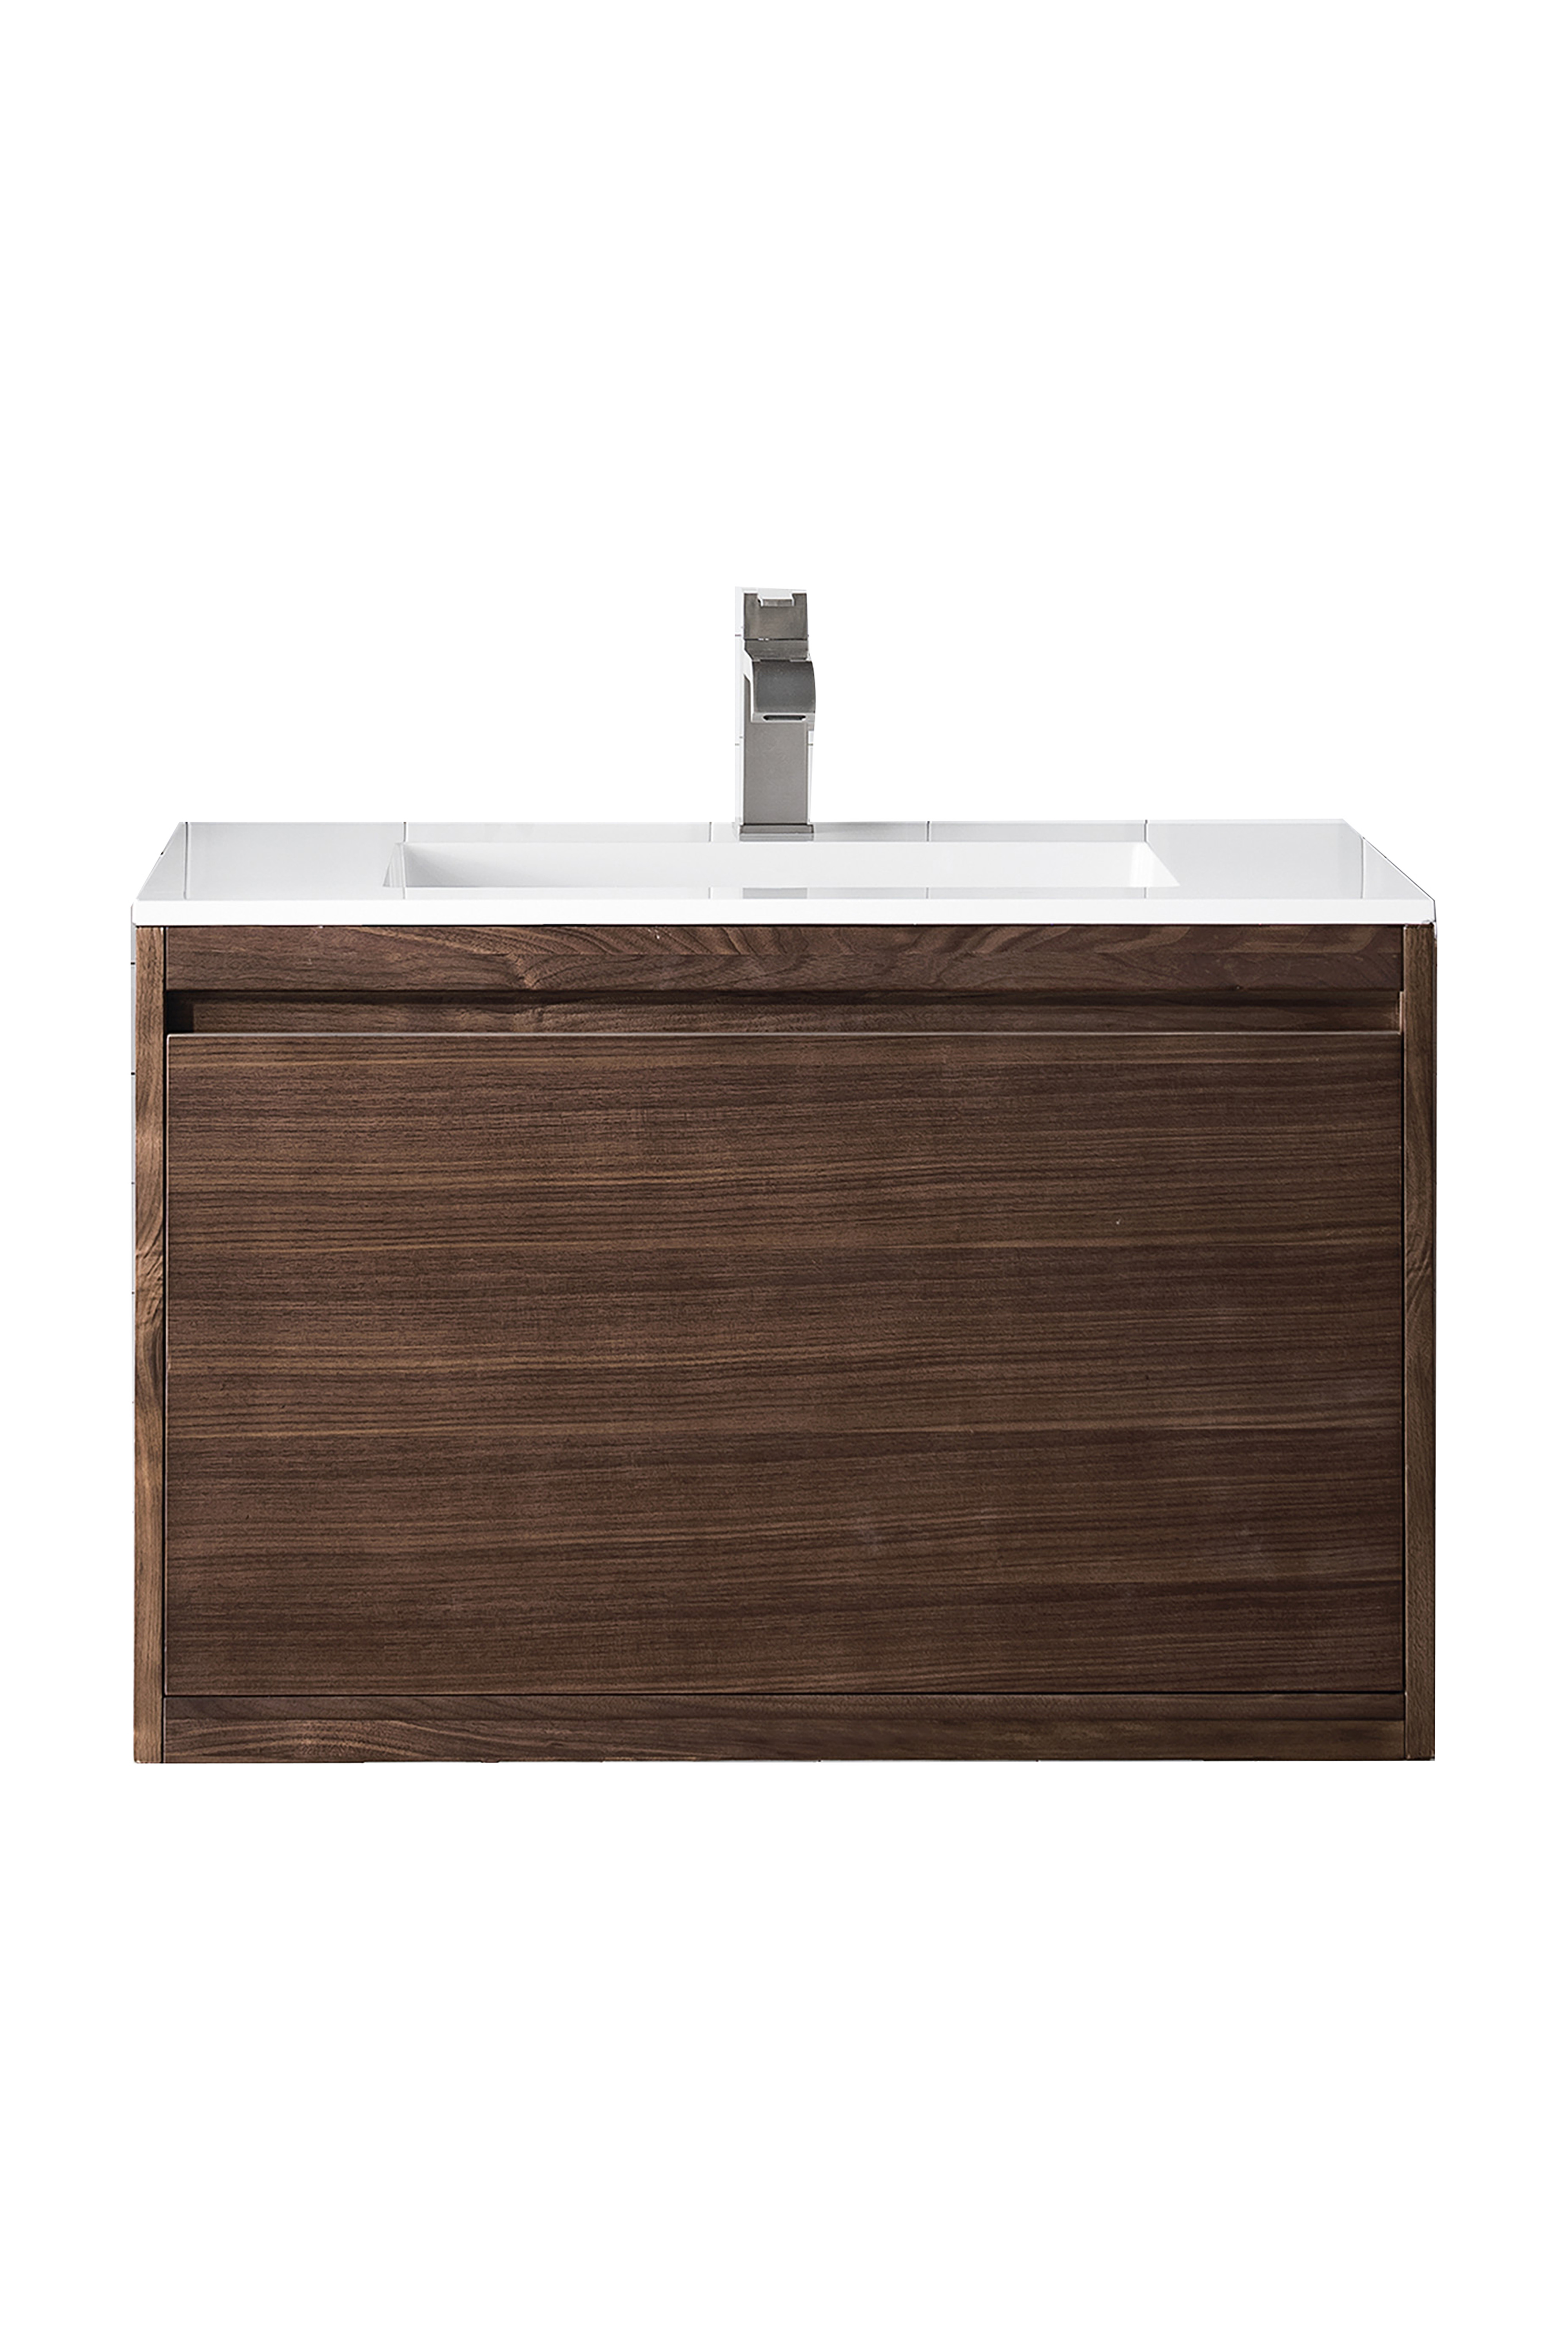 James Martin 801V31.5WLTGW Milan 31.5" Single Vanity Cabinet, Mid Century Walnut w/Glossy White Composite Top